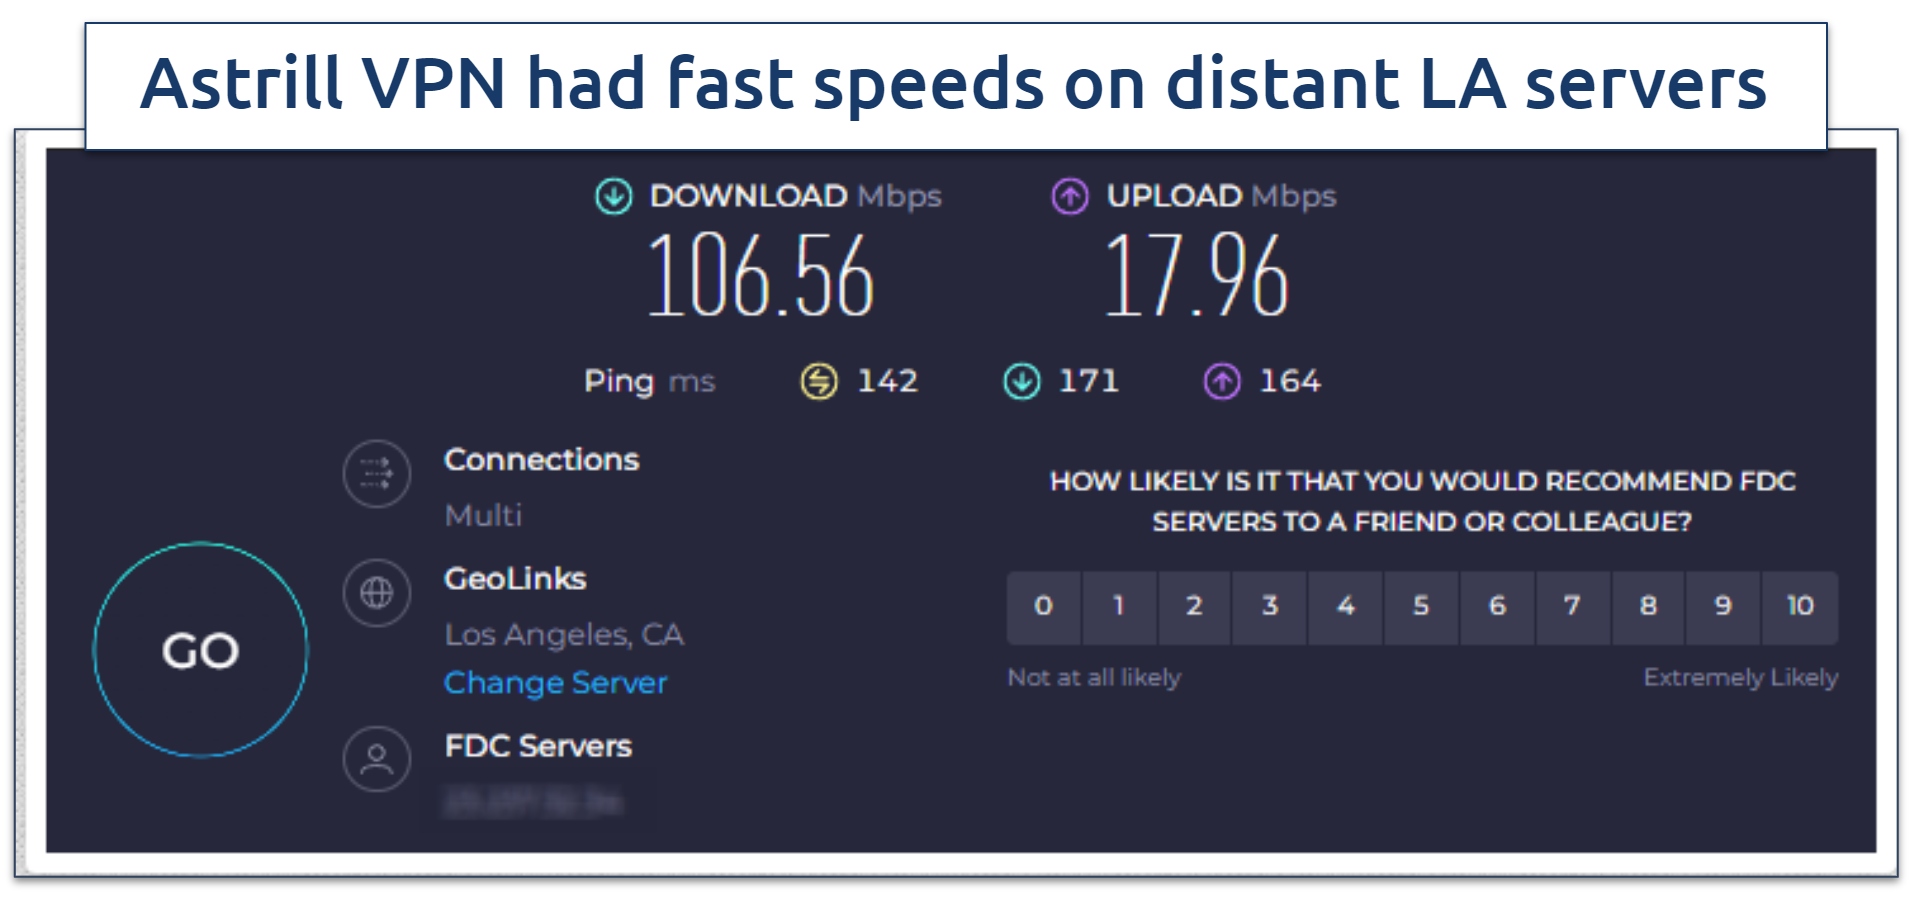 AstrillVPN speed test results on a US server